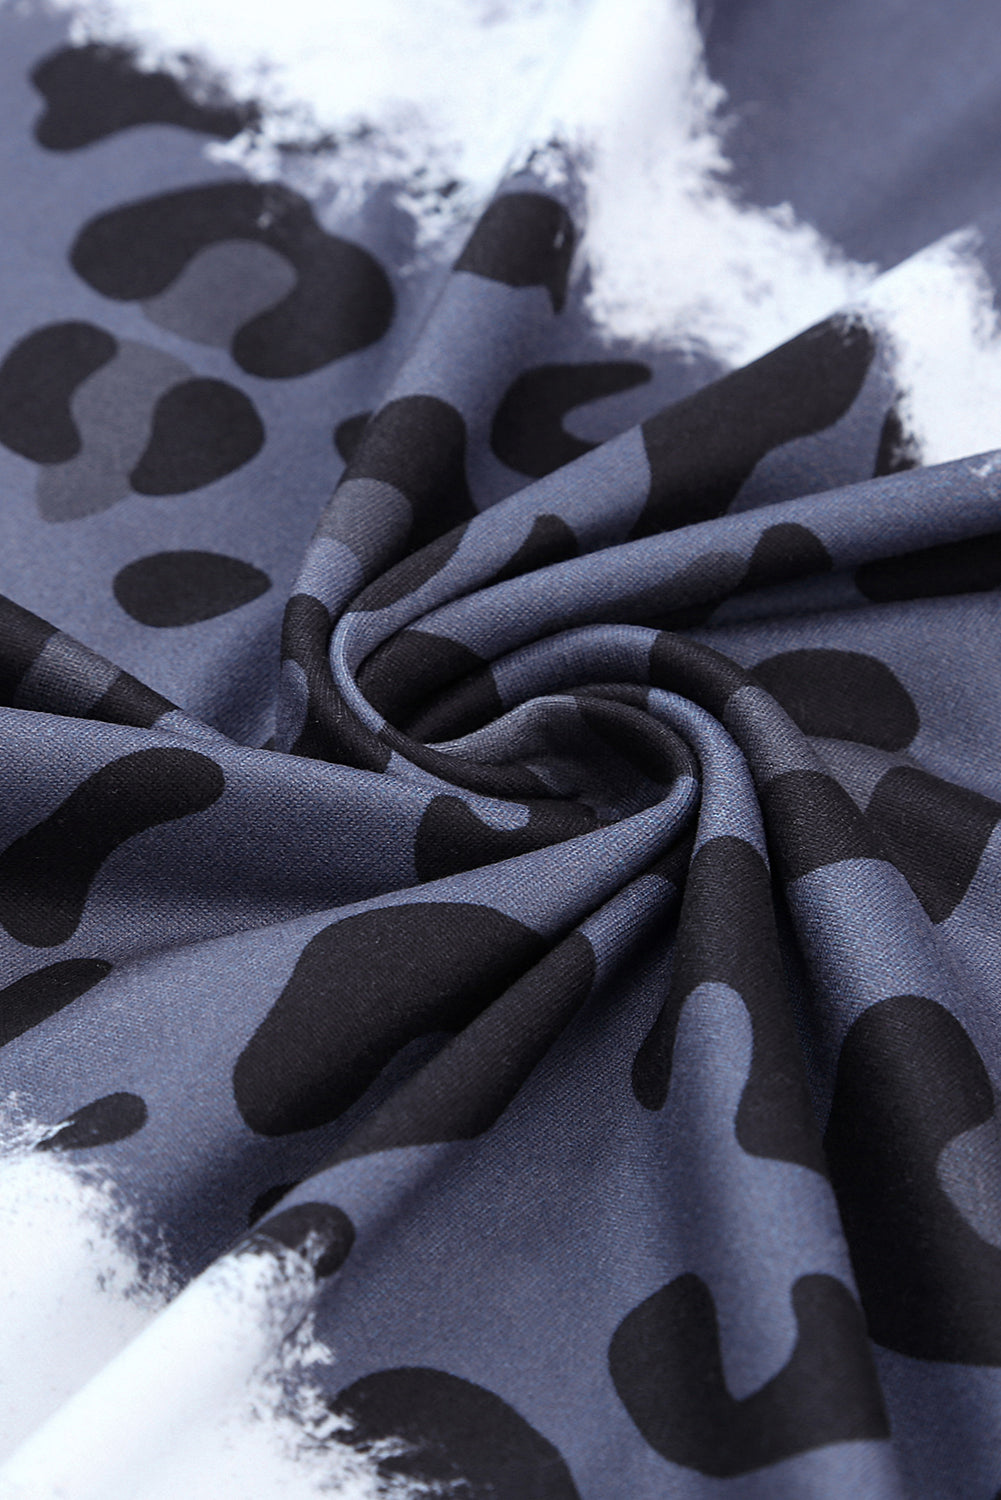 Grey Leopard Tie Dye Color Block V-Neck T-Shirt Dress